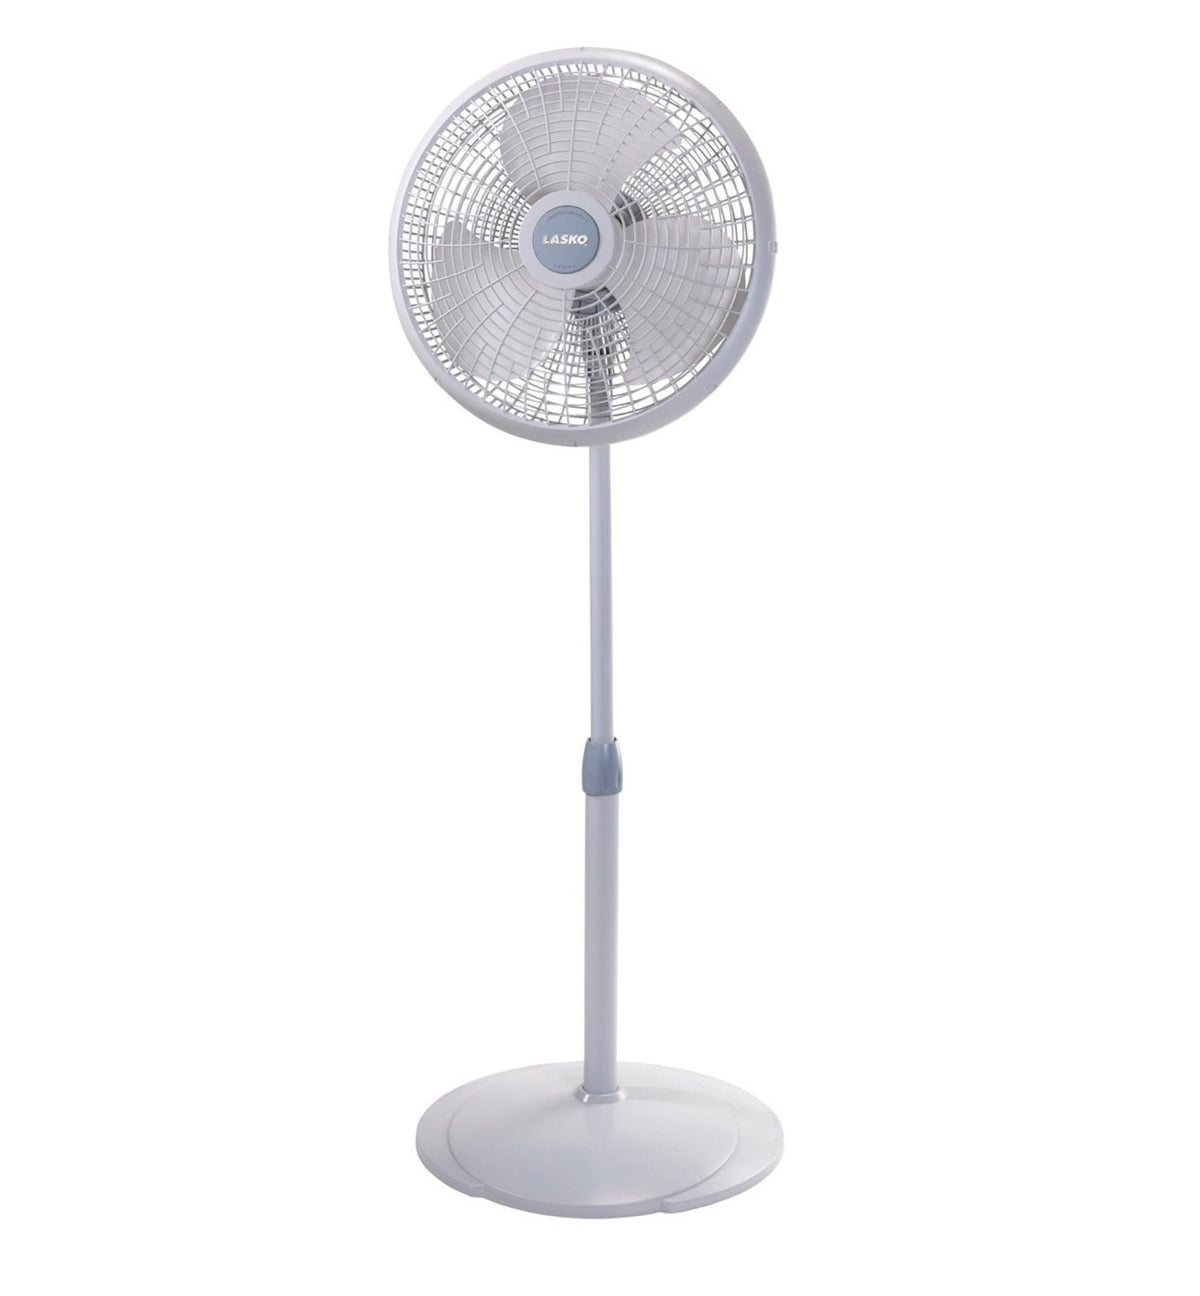 buy pedestal fans at cheap rate in bulk. wholesale & retail fans & vent kits store.